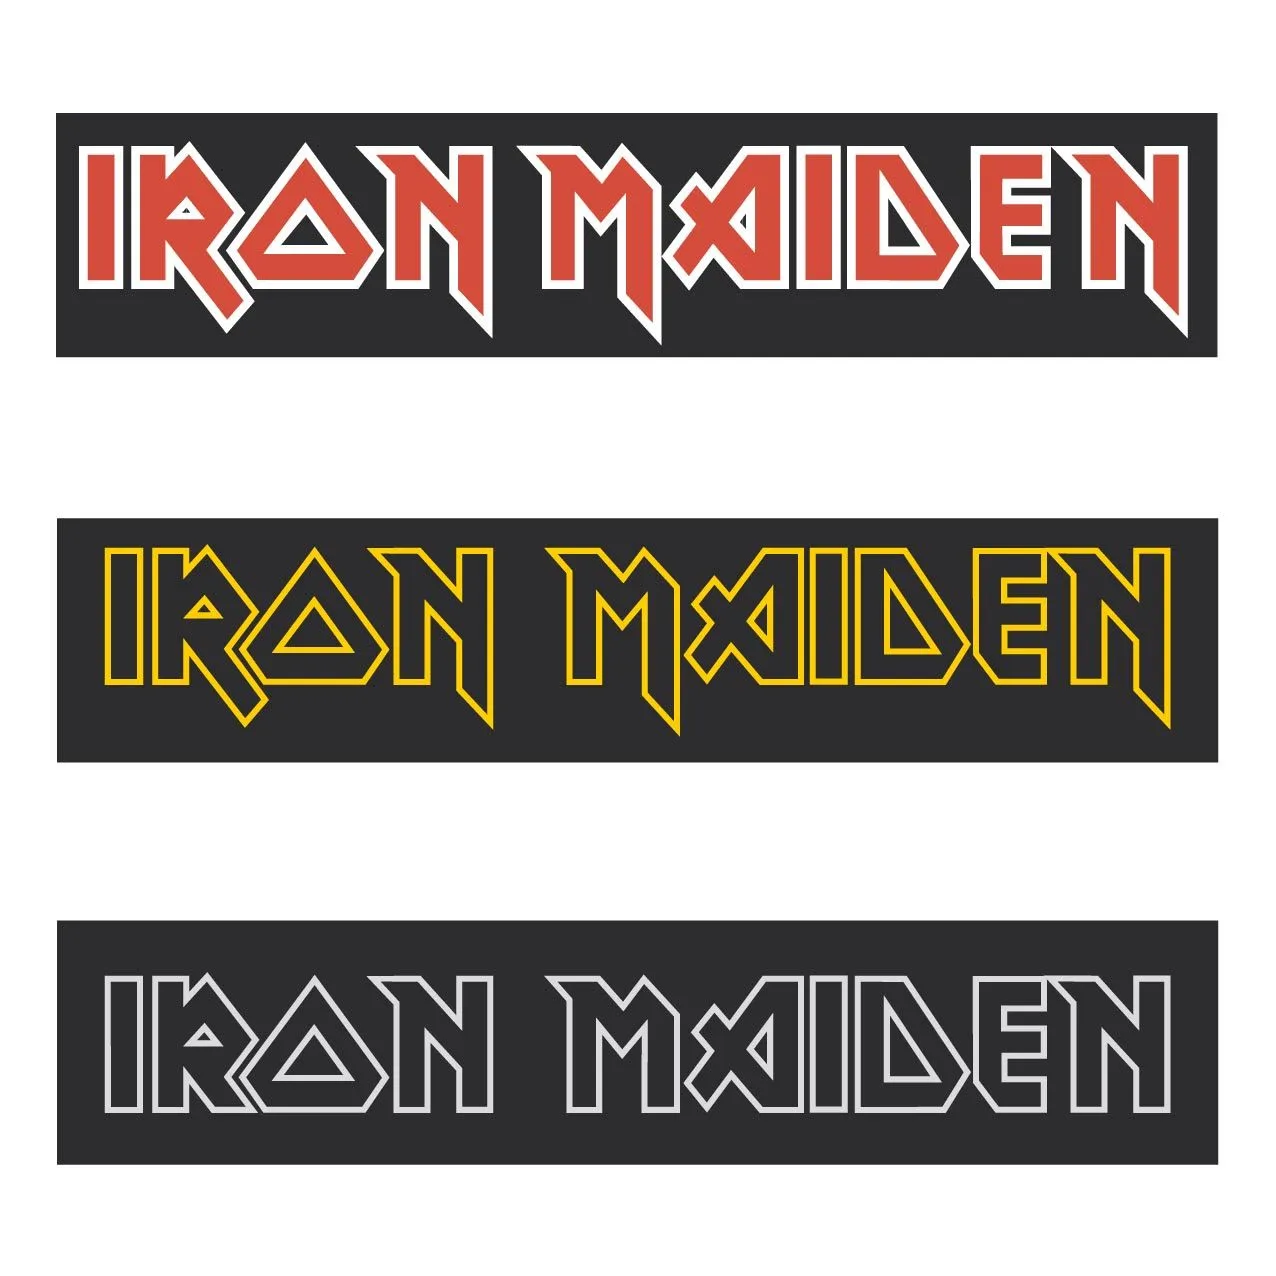 download Iron Maiden logo in eps format